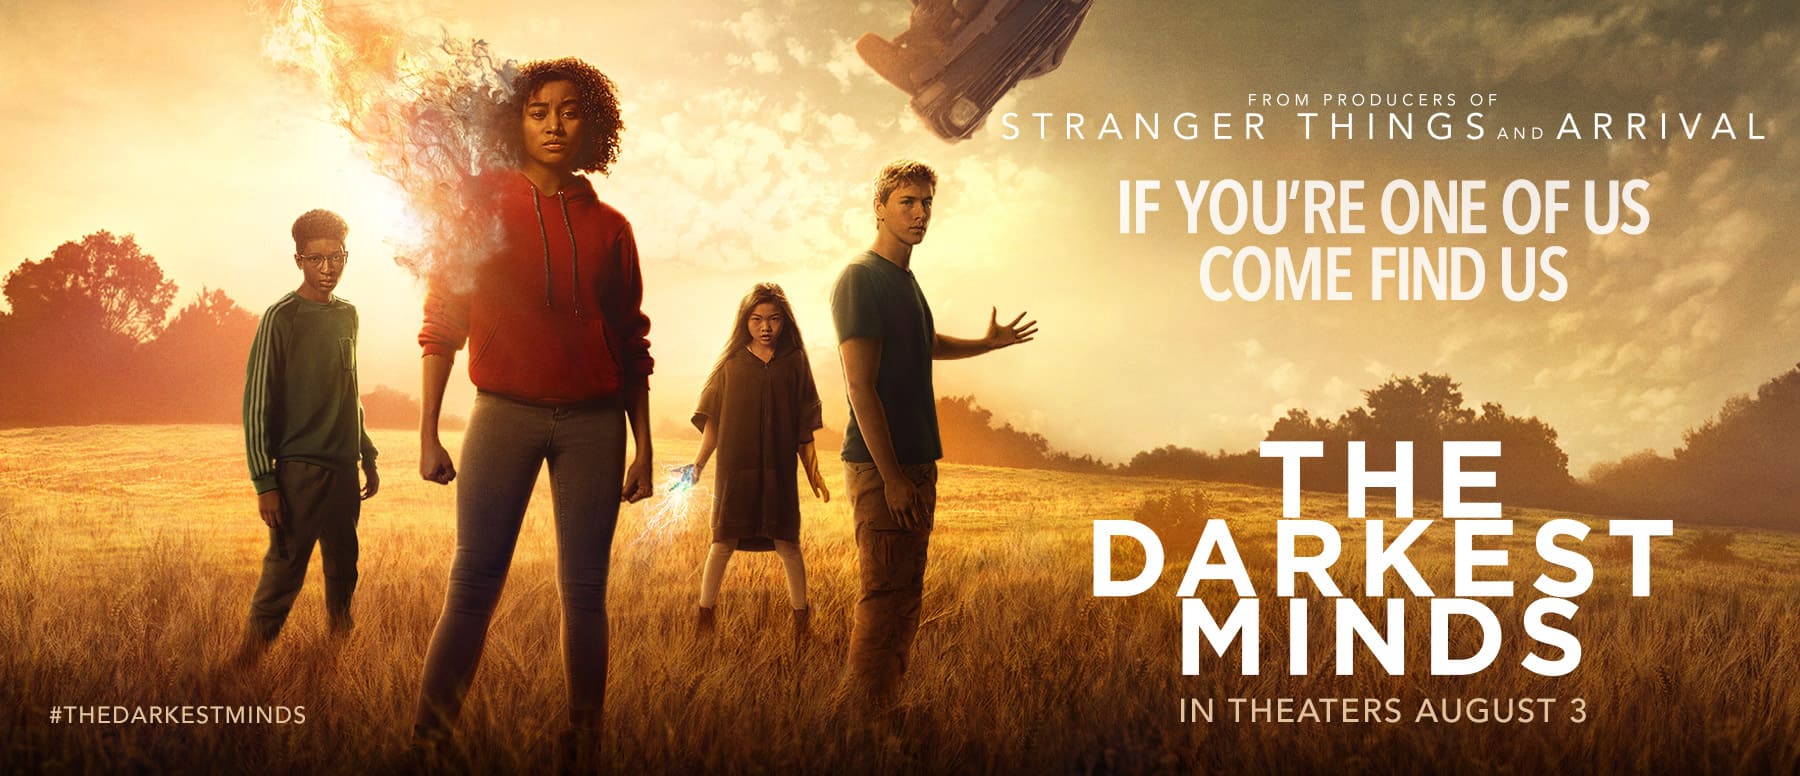 The Darkest Minds 4K 2018 big poster